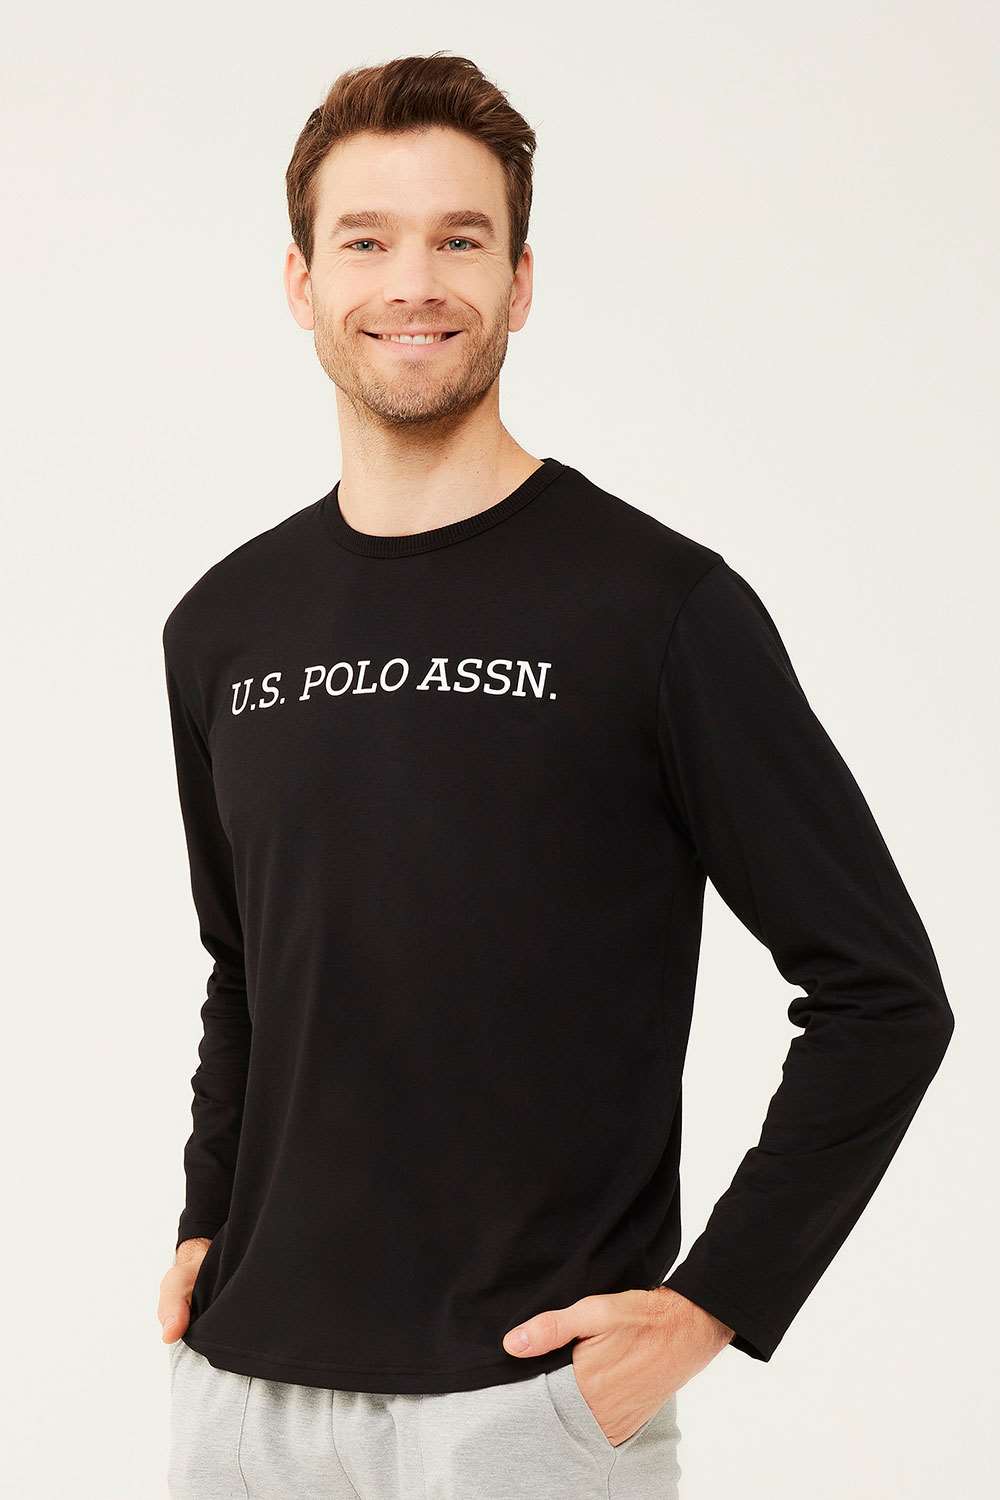 U.S. Polo Assn. Erkek Siyah Uzun Kollu T-shirt | Modcollection.com.tr